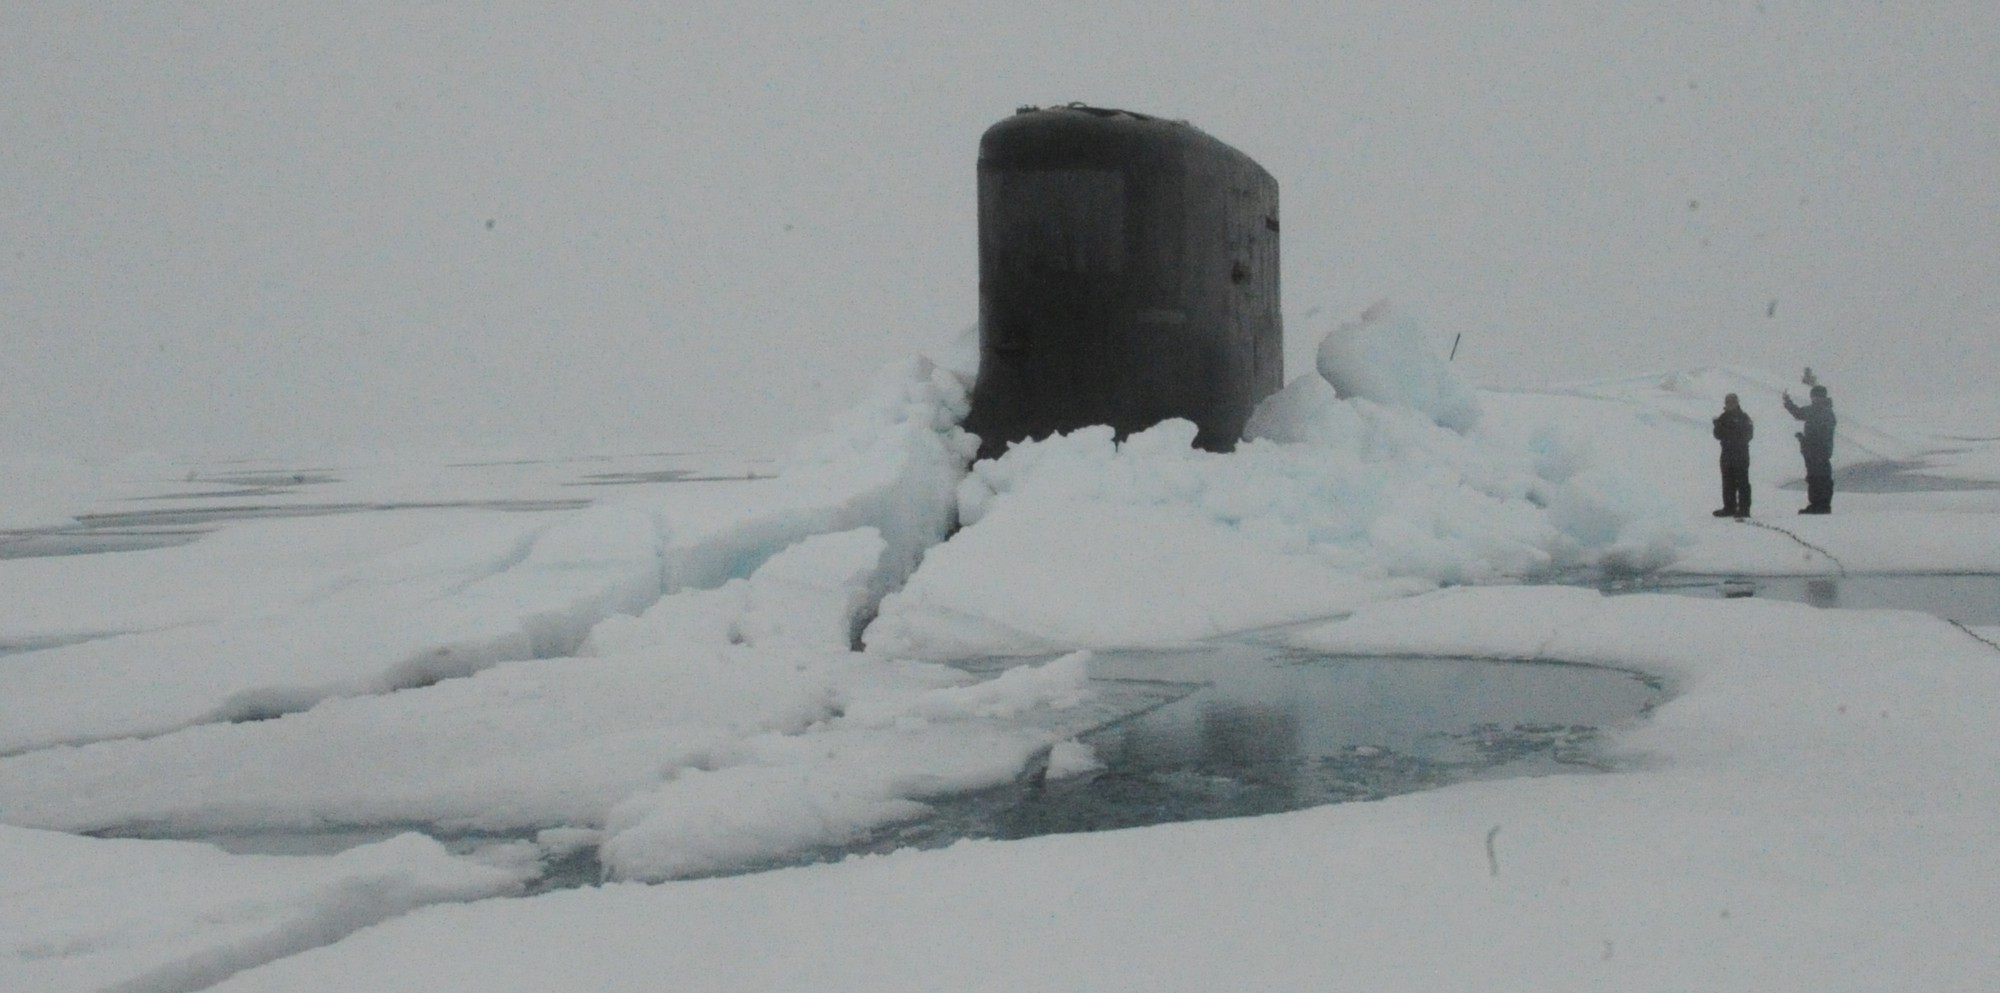 ssn-21 uss seawolf attack submarine us navy arctic ocean icex 17